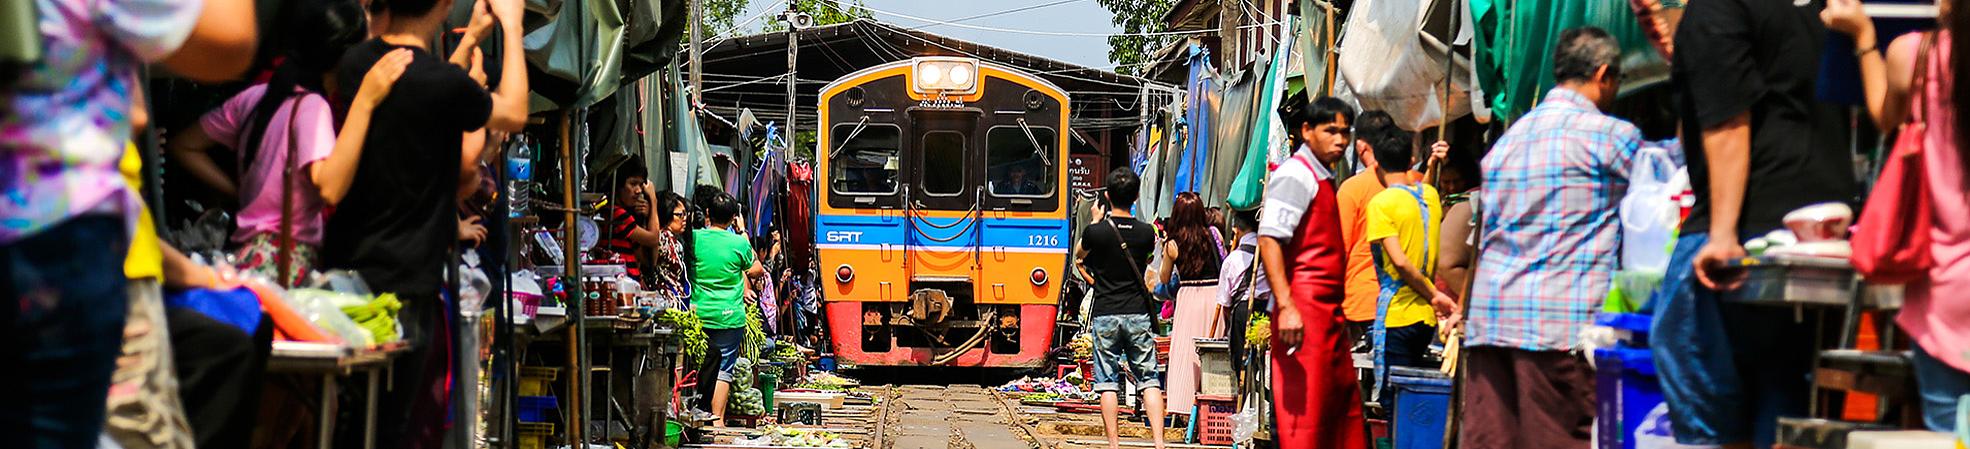 Maeklong Railway Market, Thailand